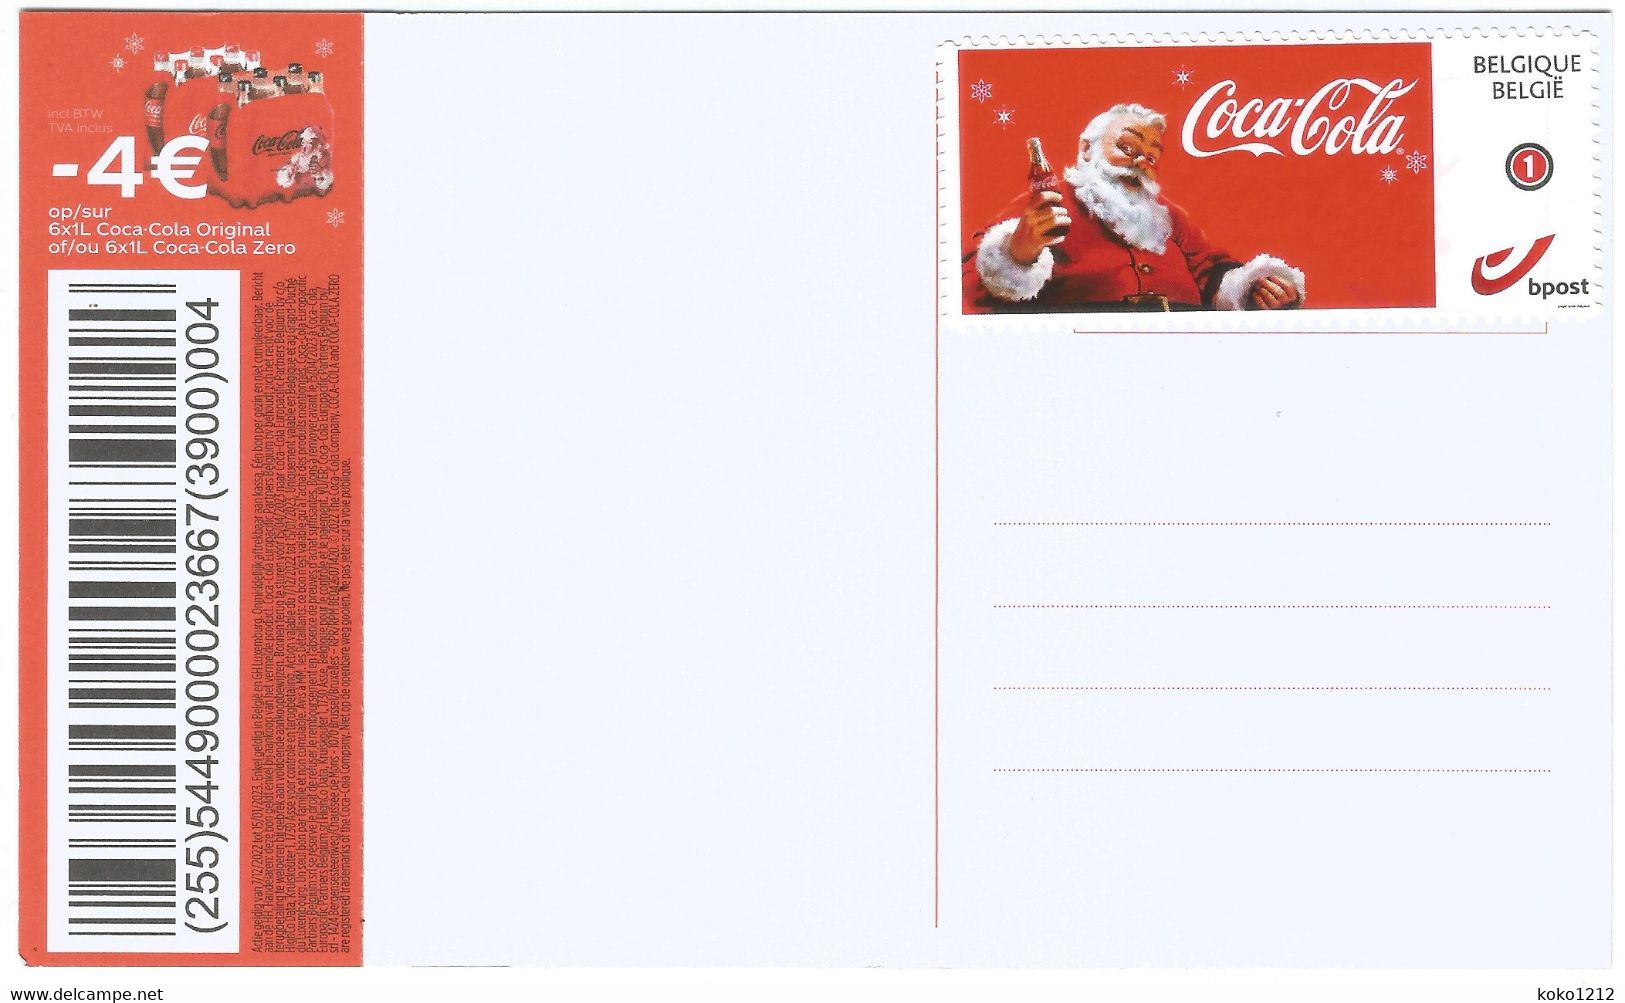 RARE CocaCola Belgium Postcard (2/2) With Private Stamp CocaCola NEUF - Cartes Postales